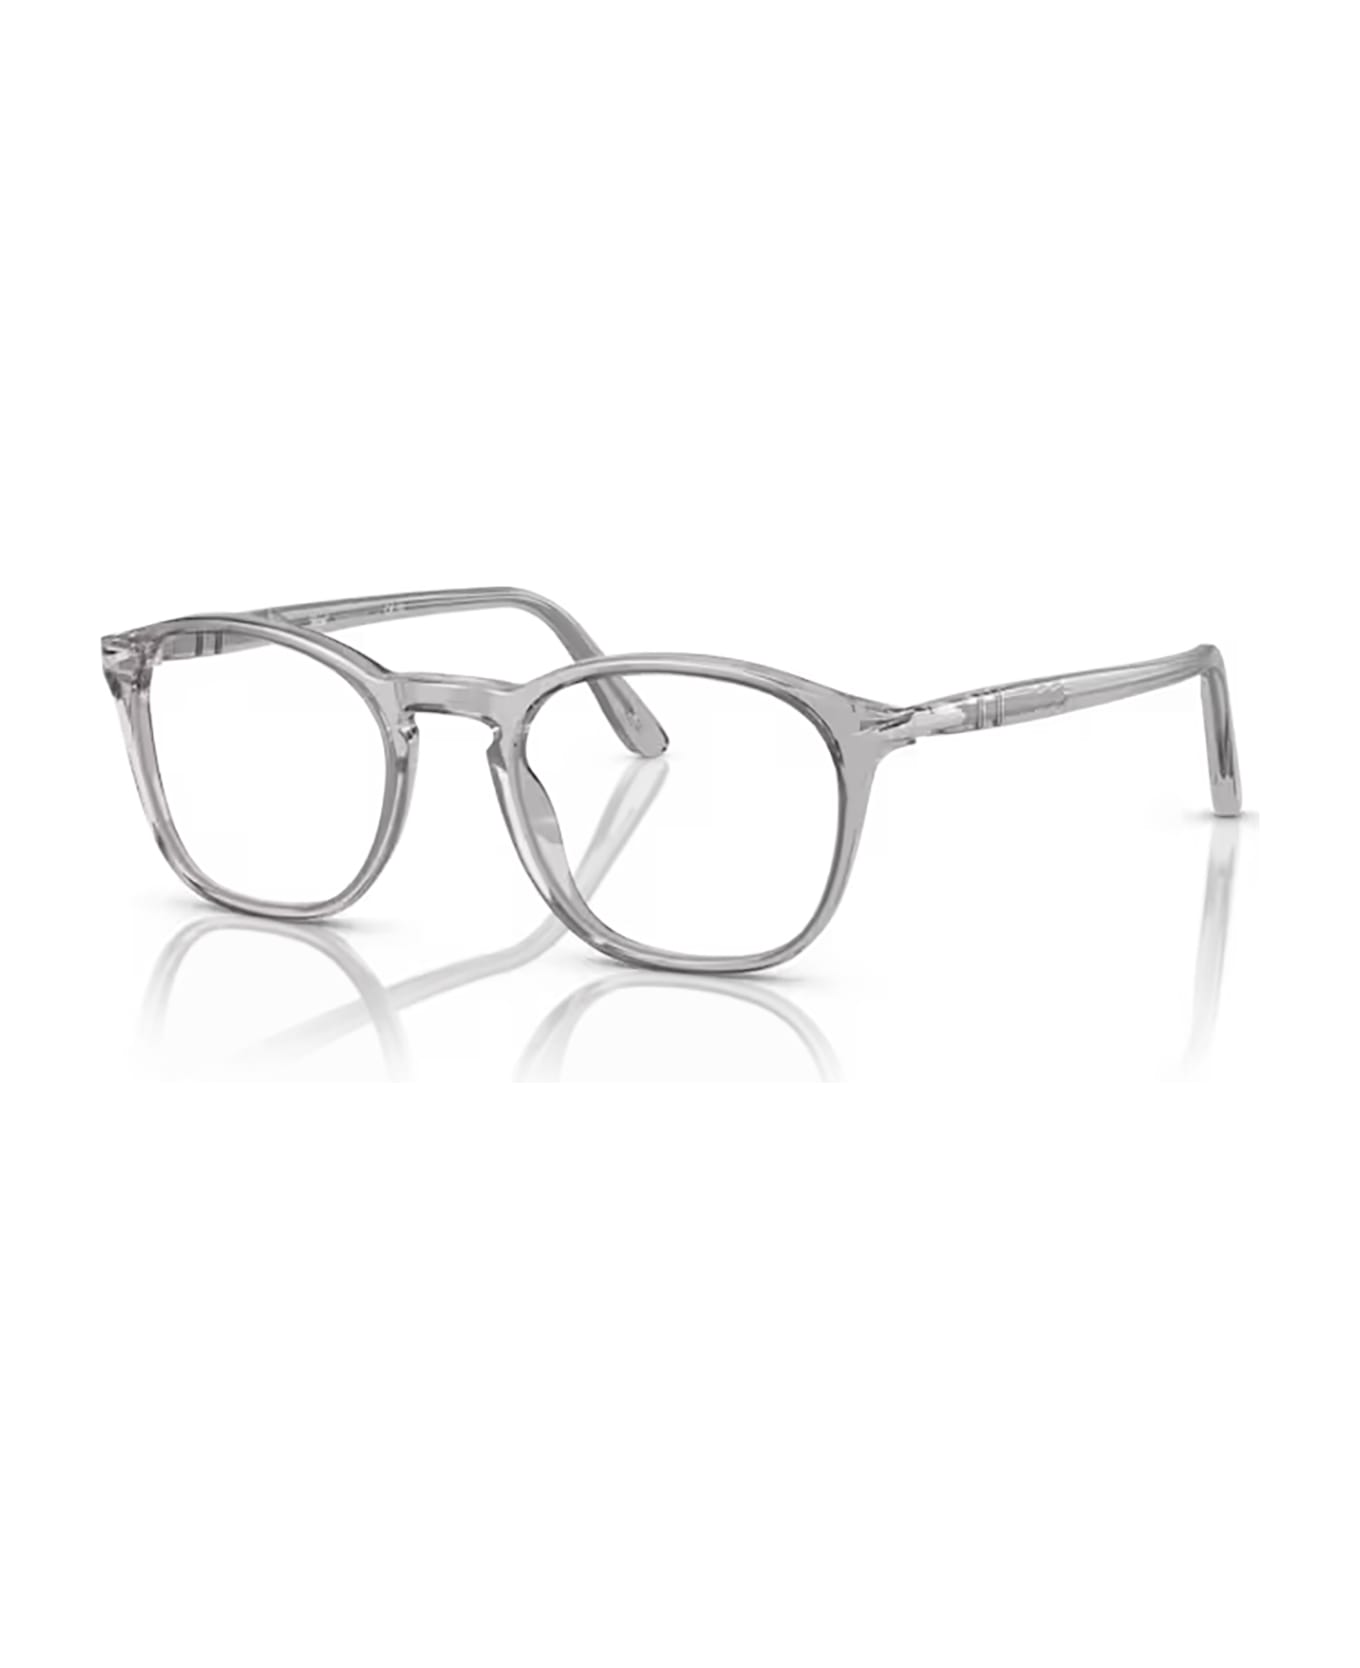 Persol Po3007v Transparent Grey Glasses - Transparent Grey